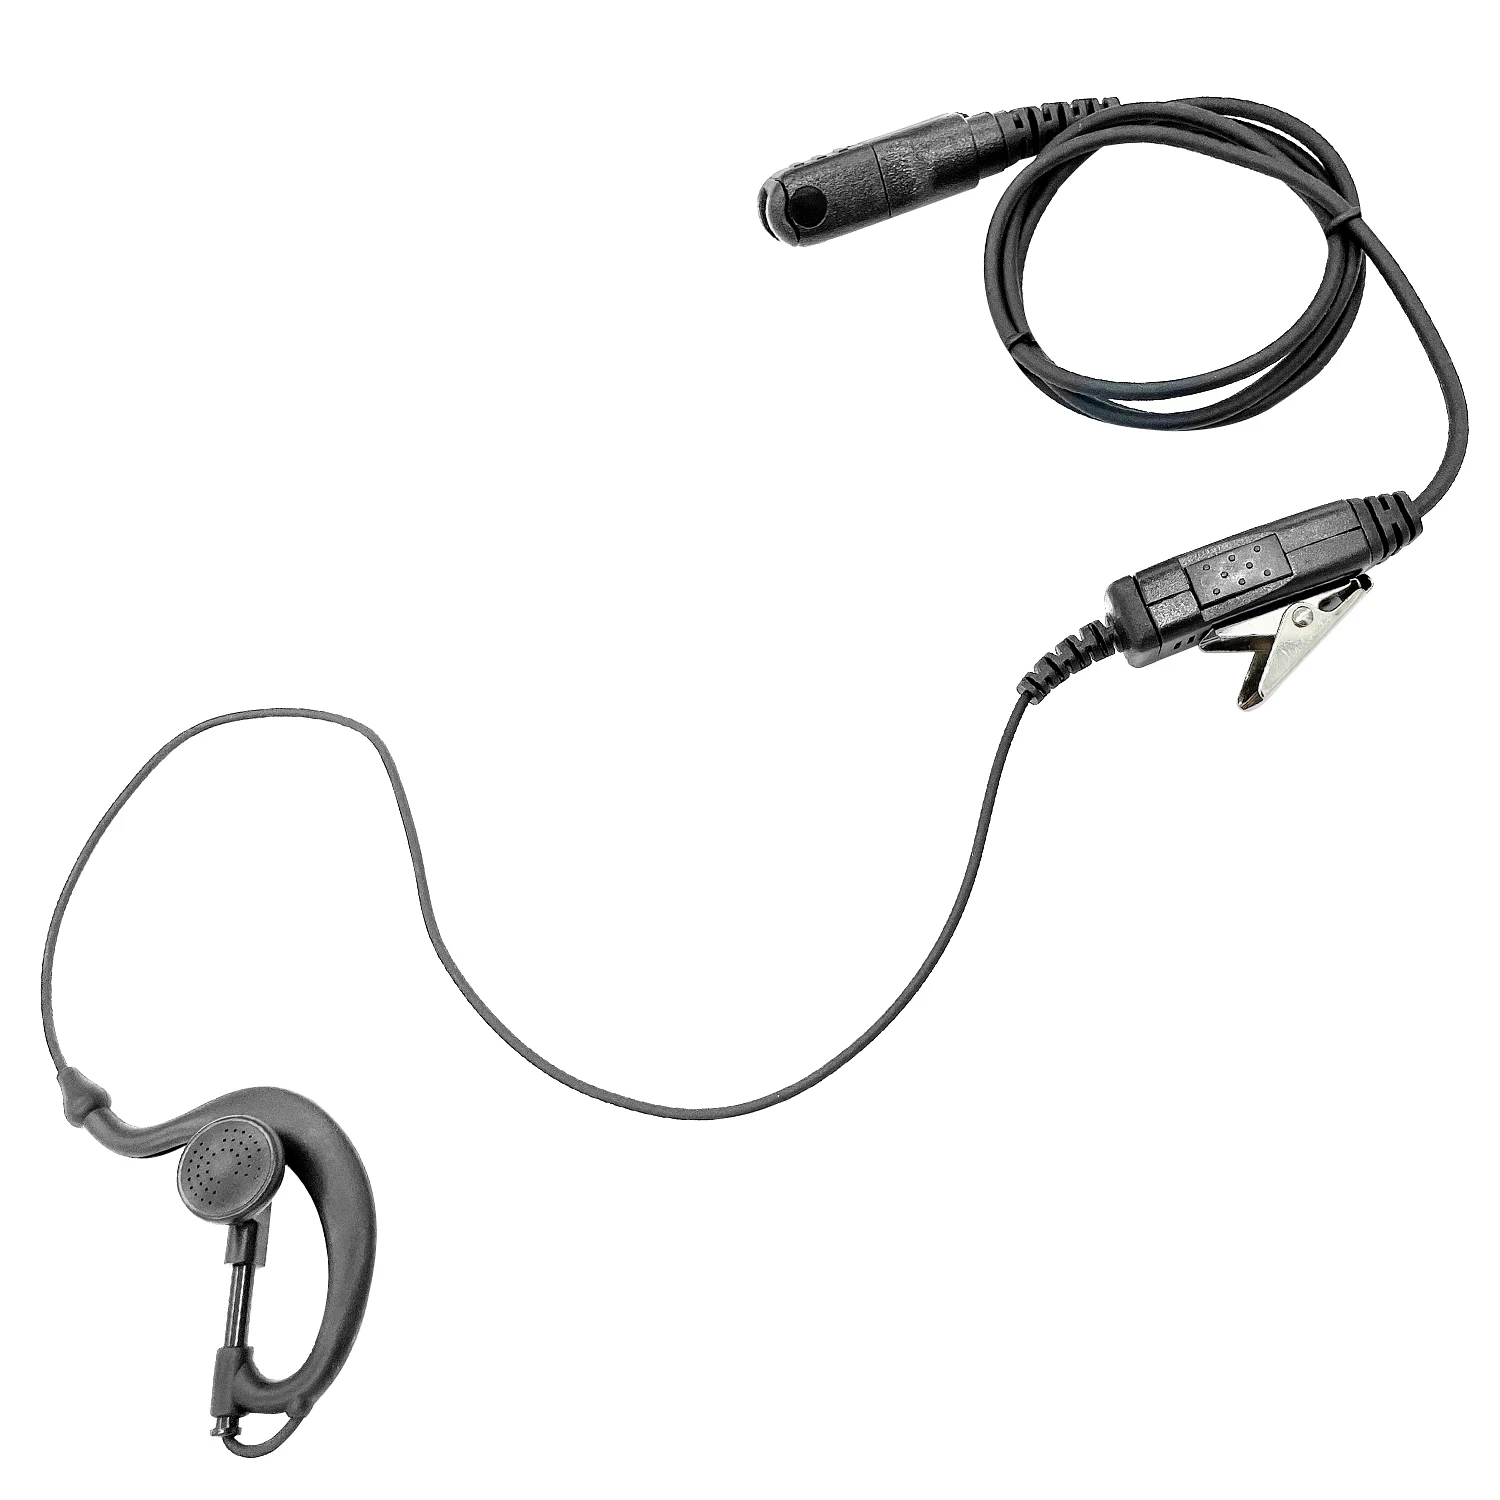 Type G headphones walkie talkie headset Earpiece microphone for  Motorola MTP3250, Tetra MTP3100, Tetra MTP3150, Tetra MTP3200 enlarge